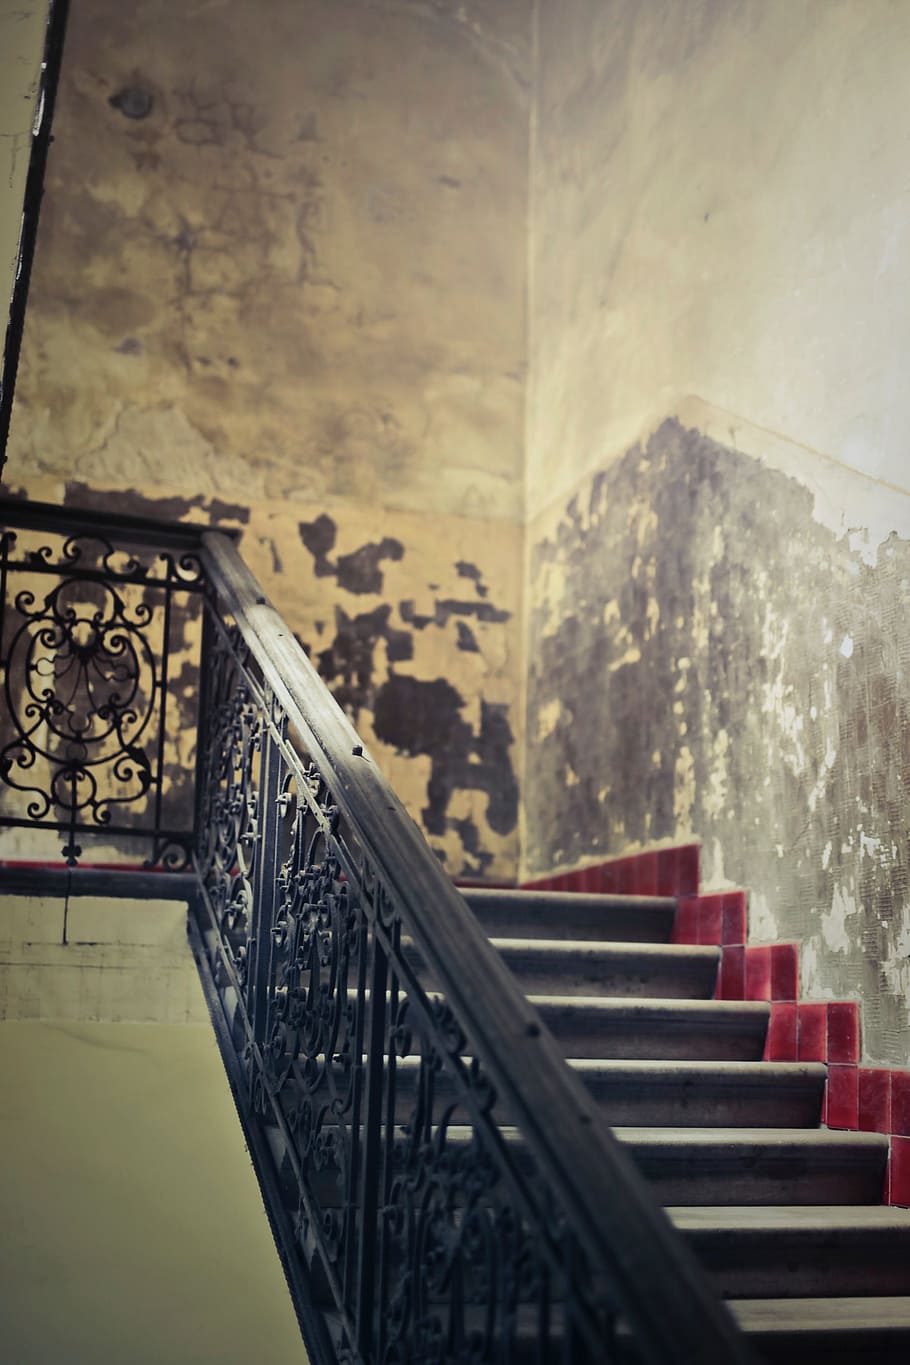 antiguo, escalera, barandas metálicas, azulejos, arquitectura, arte, interiores, mansión, barandilla, escaleras